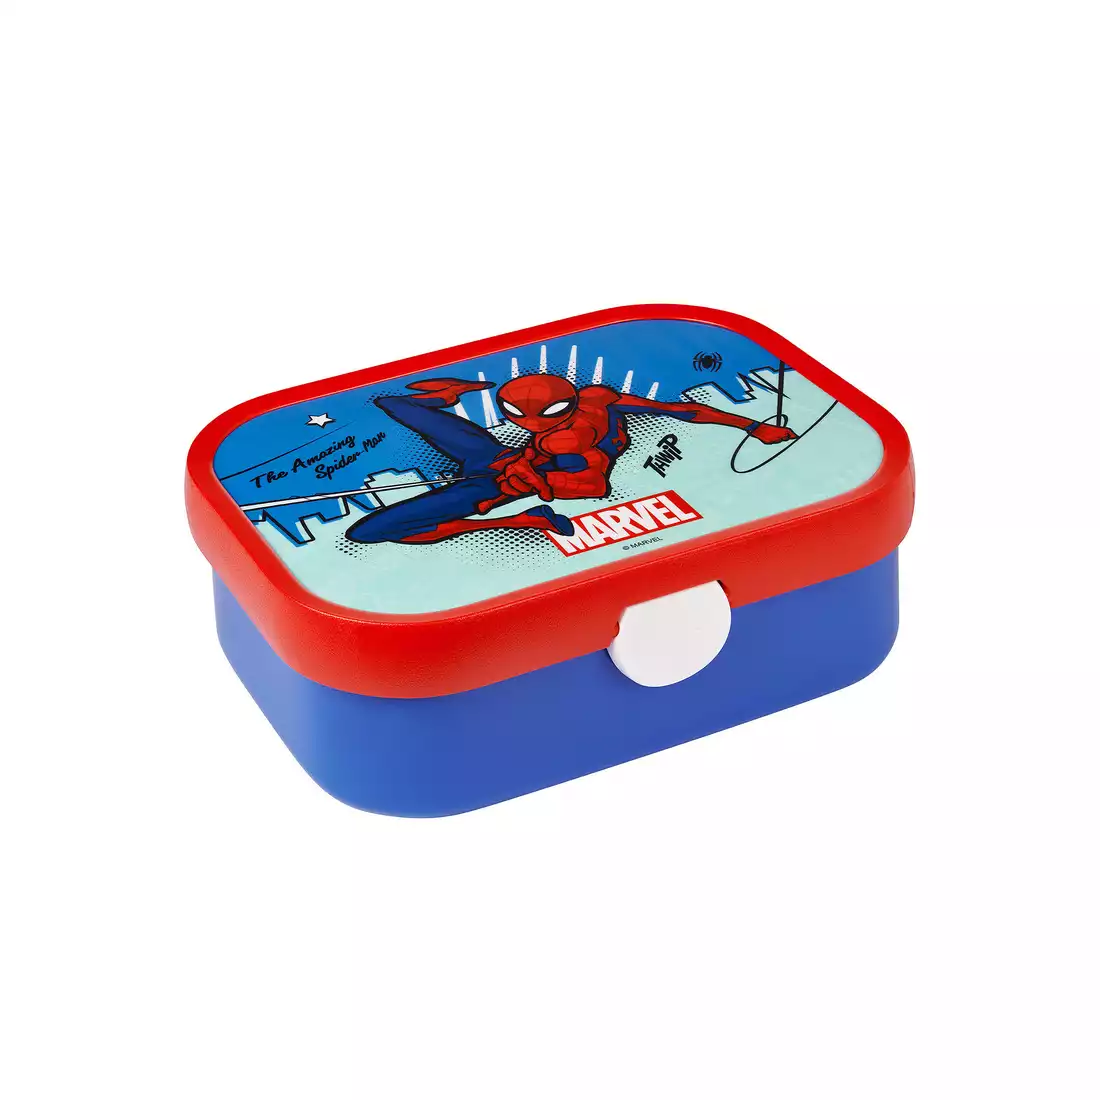 Mepal Campus Spiderman gyerekeknek lunchbox, kék piros